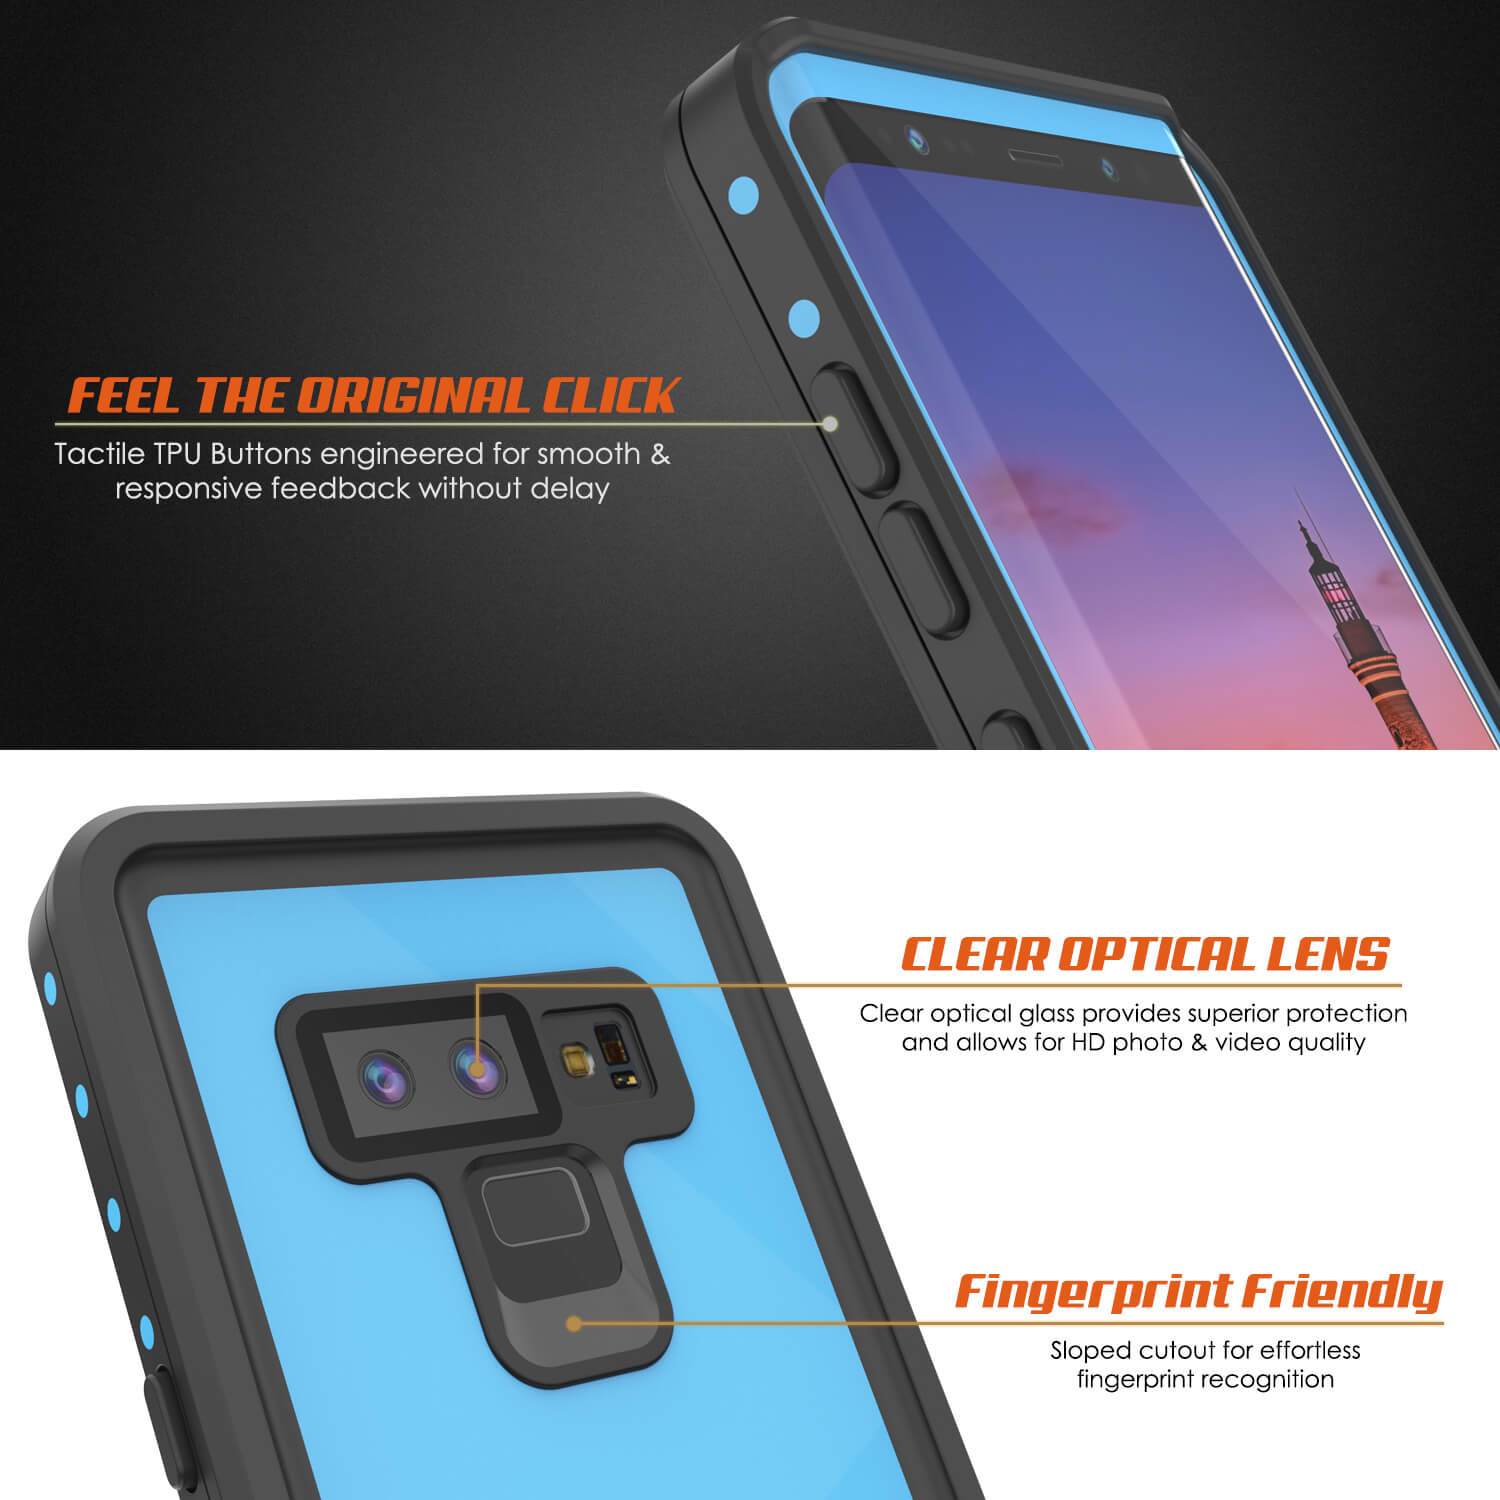 Galaxy Note 9 Waterproof Case PunkCase StudStar Light Blue Thin 6.6ft Underwater ShockProof